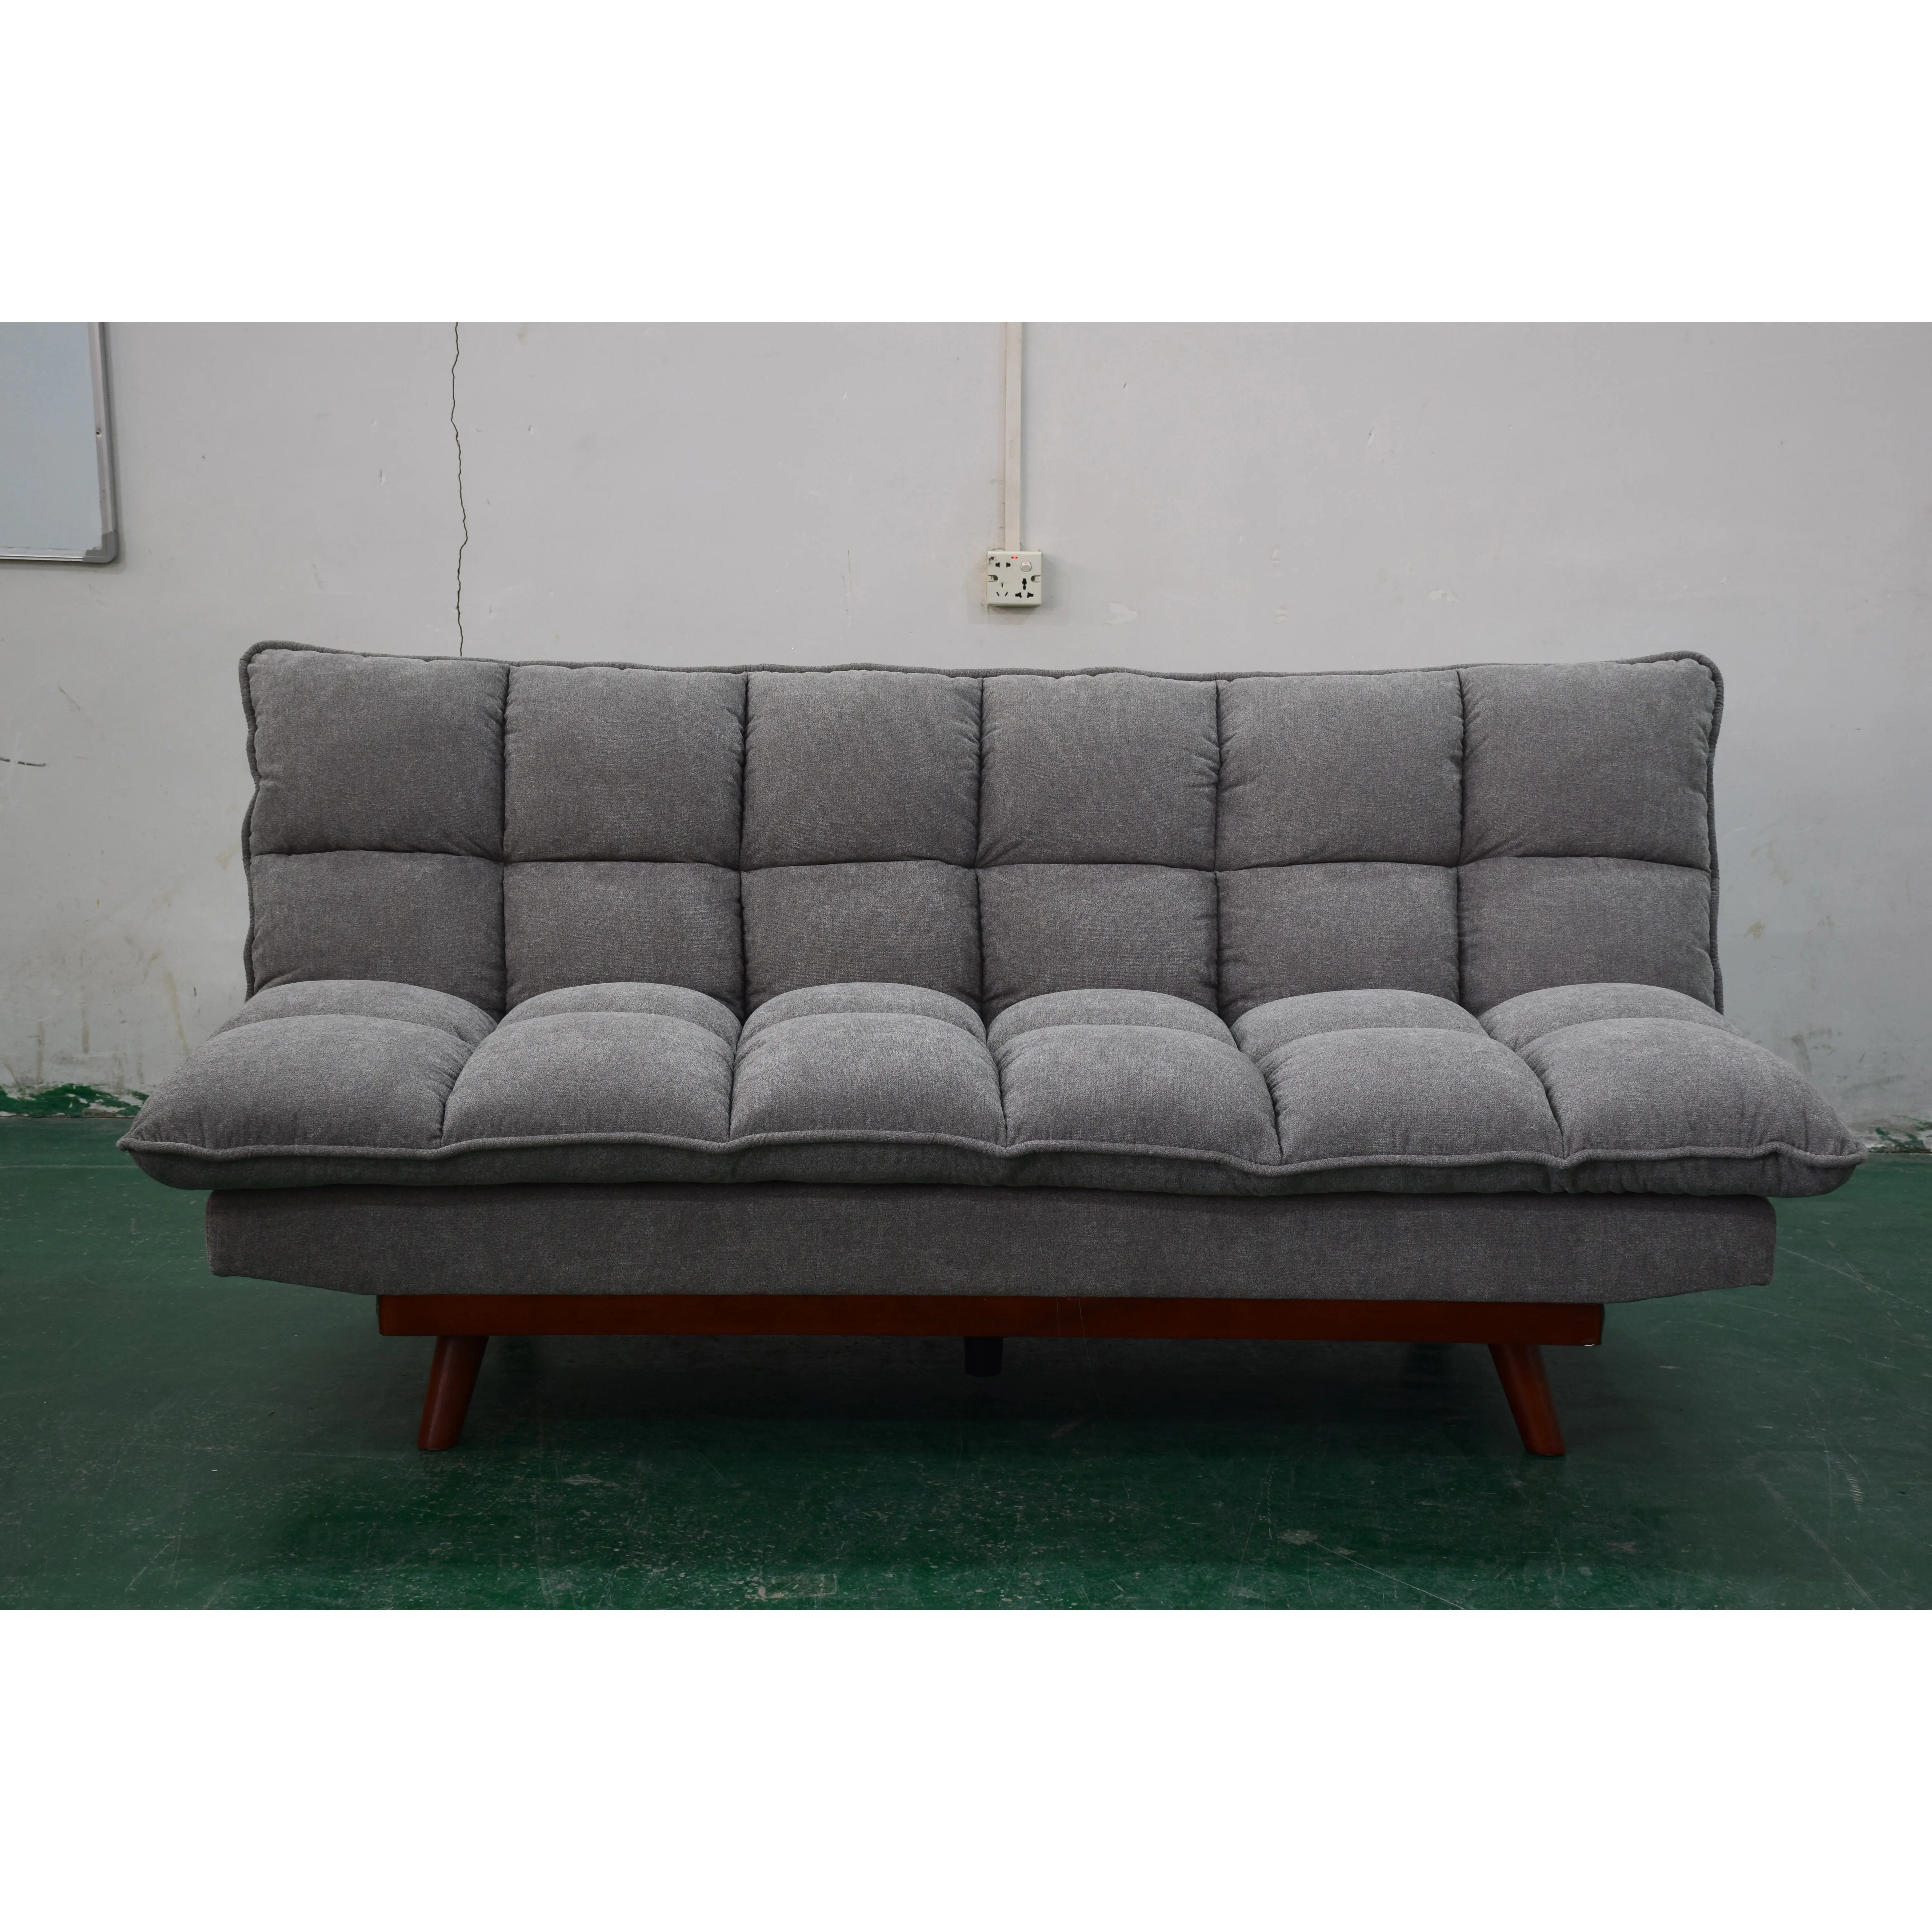 fabrik direktverkauf schlafsofa bett kundenspezifische produktion sofa bett laken geteiltes sofa bett große größe